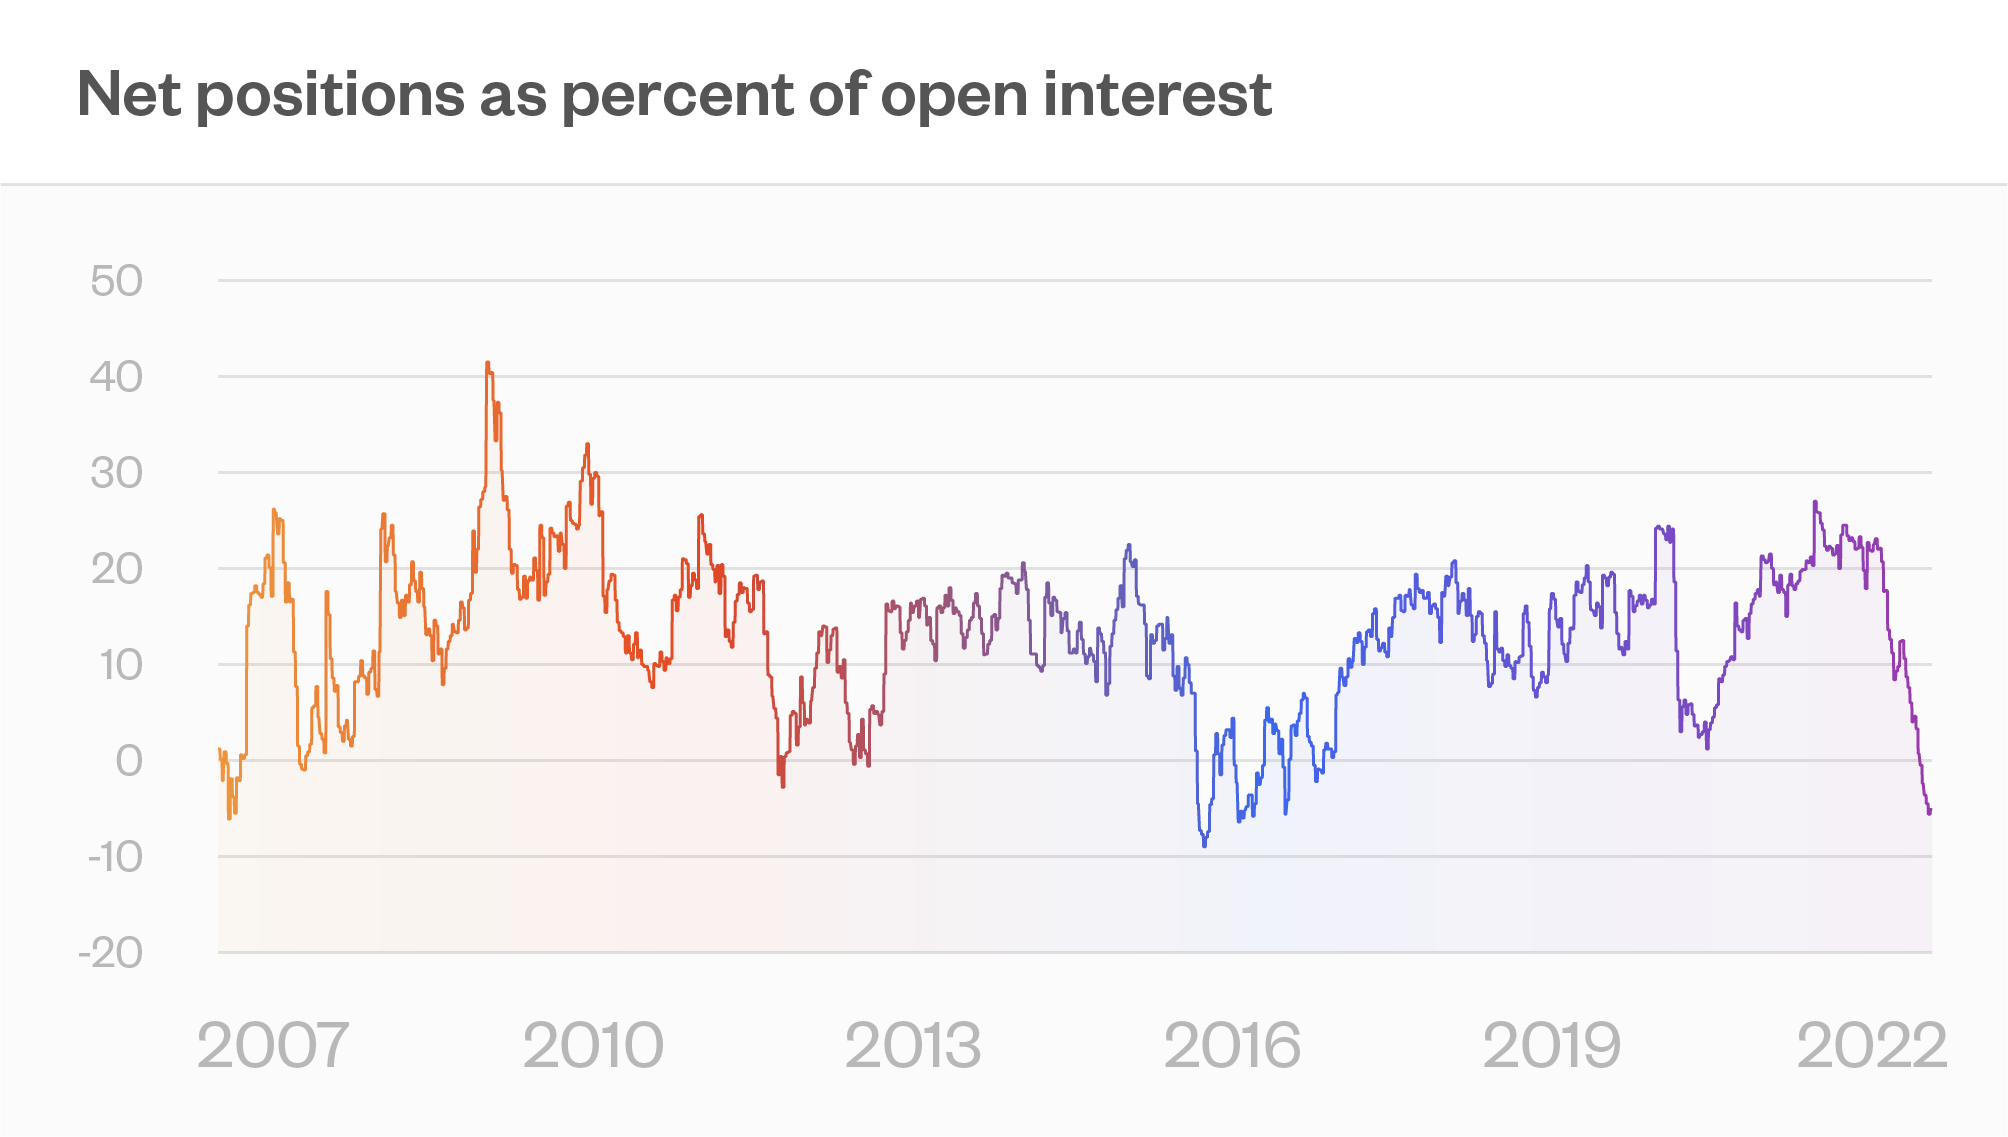 Net positions as percent of open interest